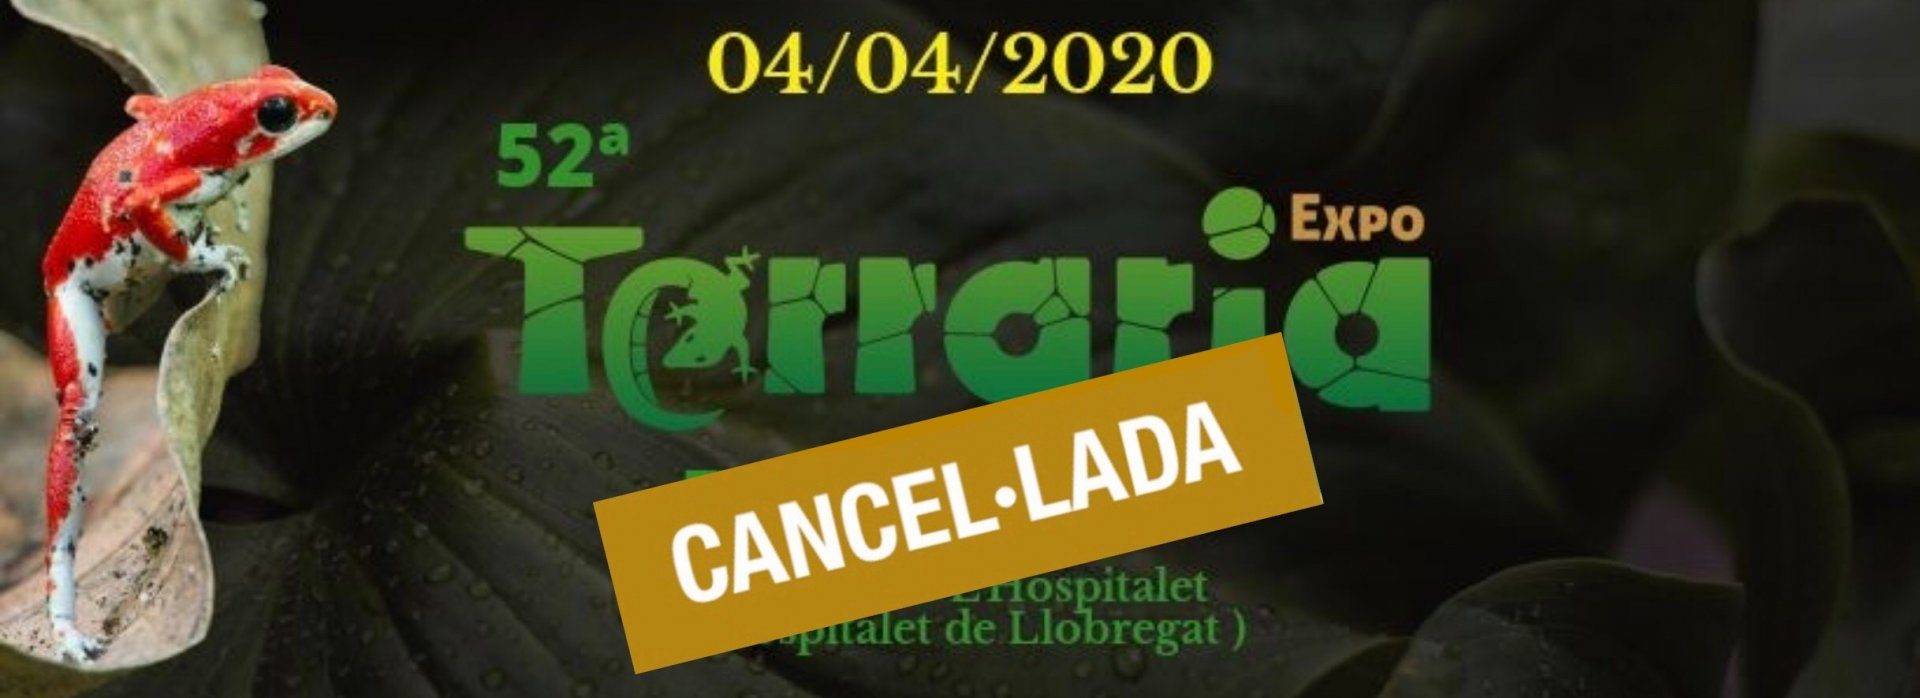 ExpoTerraria a l’Hospitalet 2020 cancelada